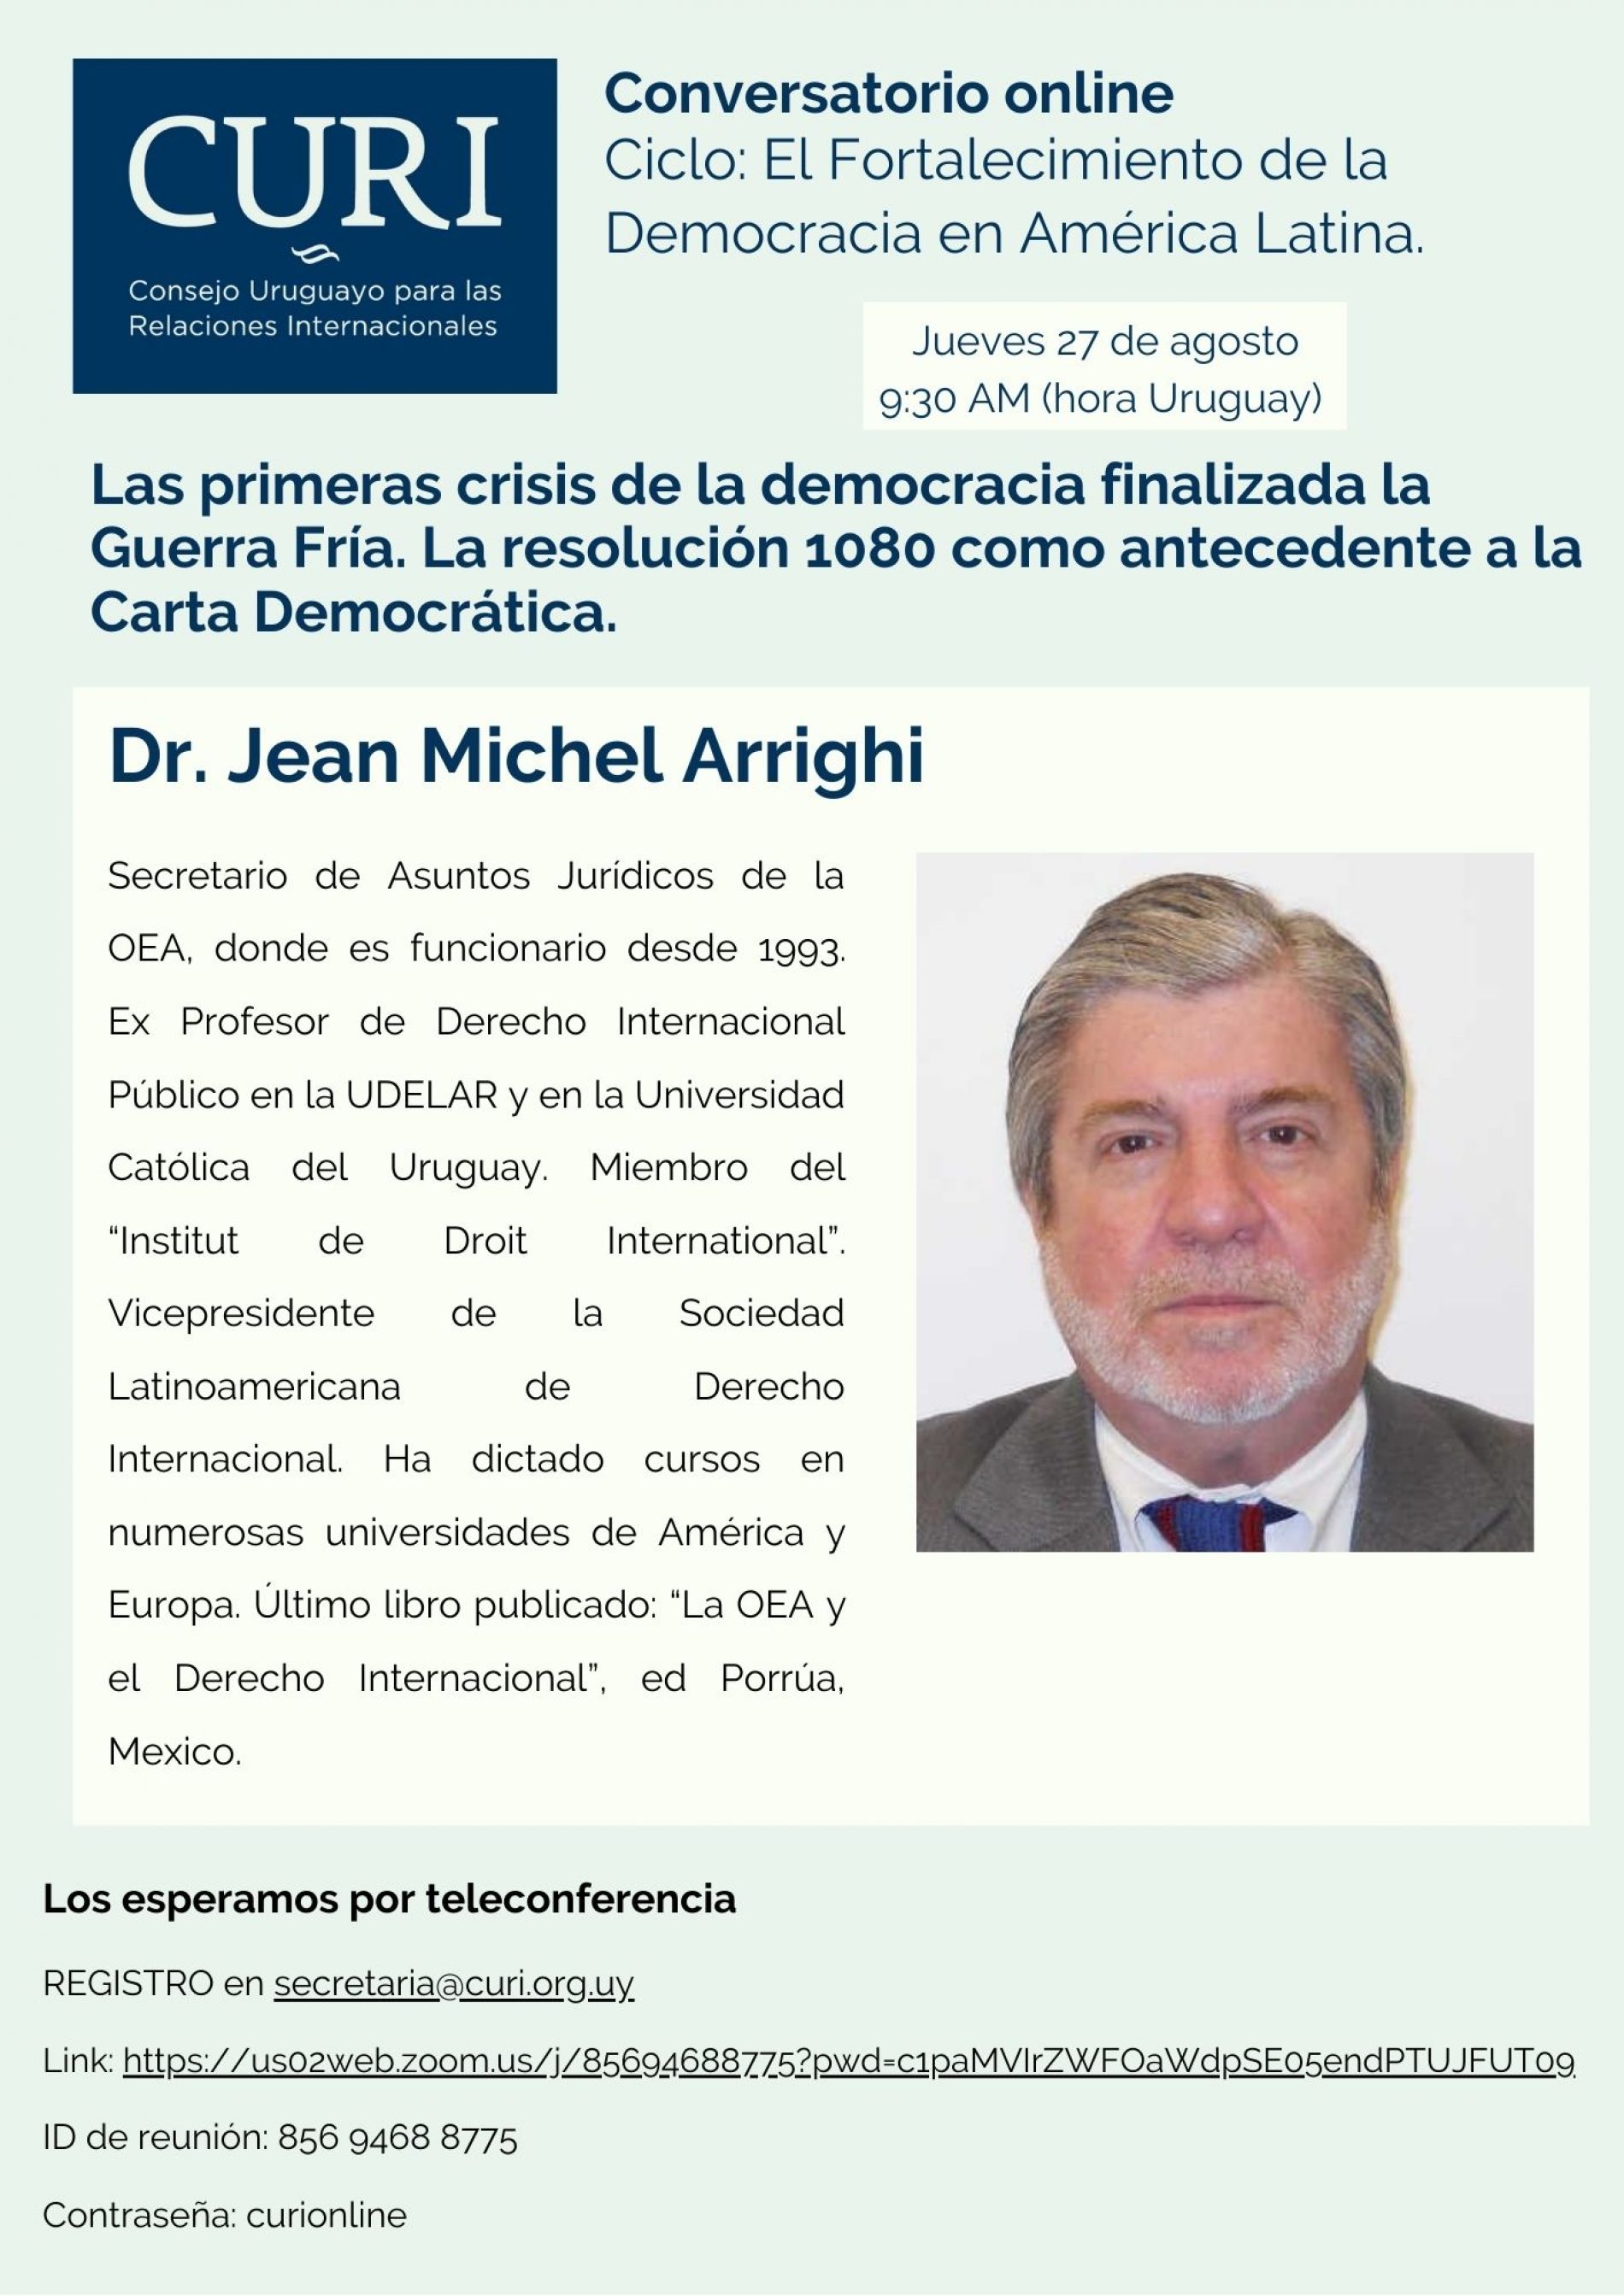 CURI ONLINE con Dr. Jean Michel Arrighi